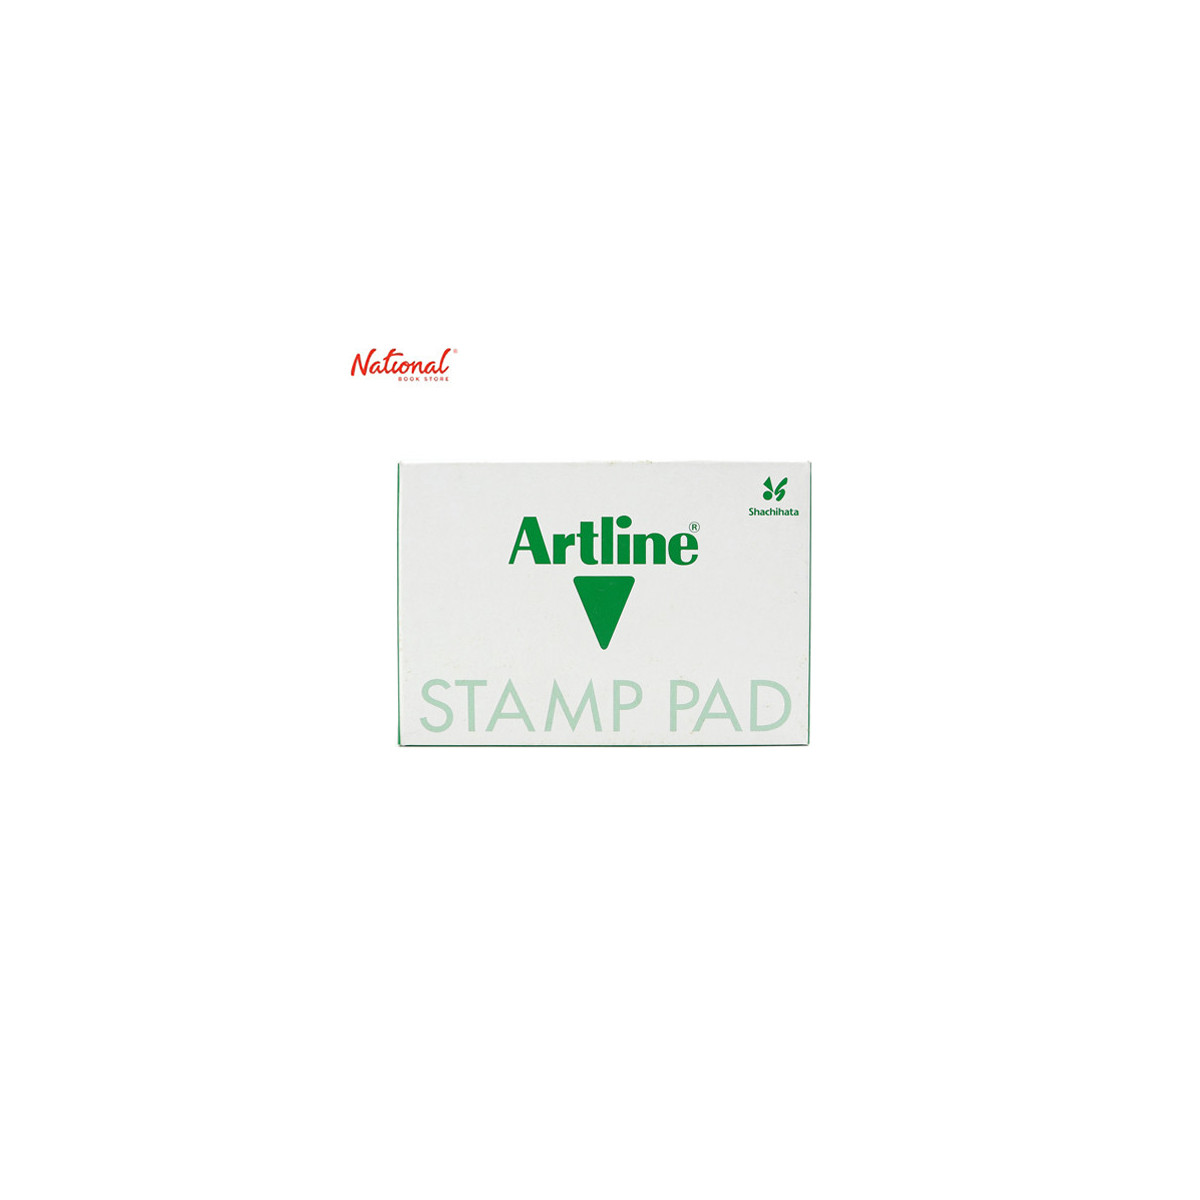 Artline Stamp Pad 1, Green